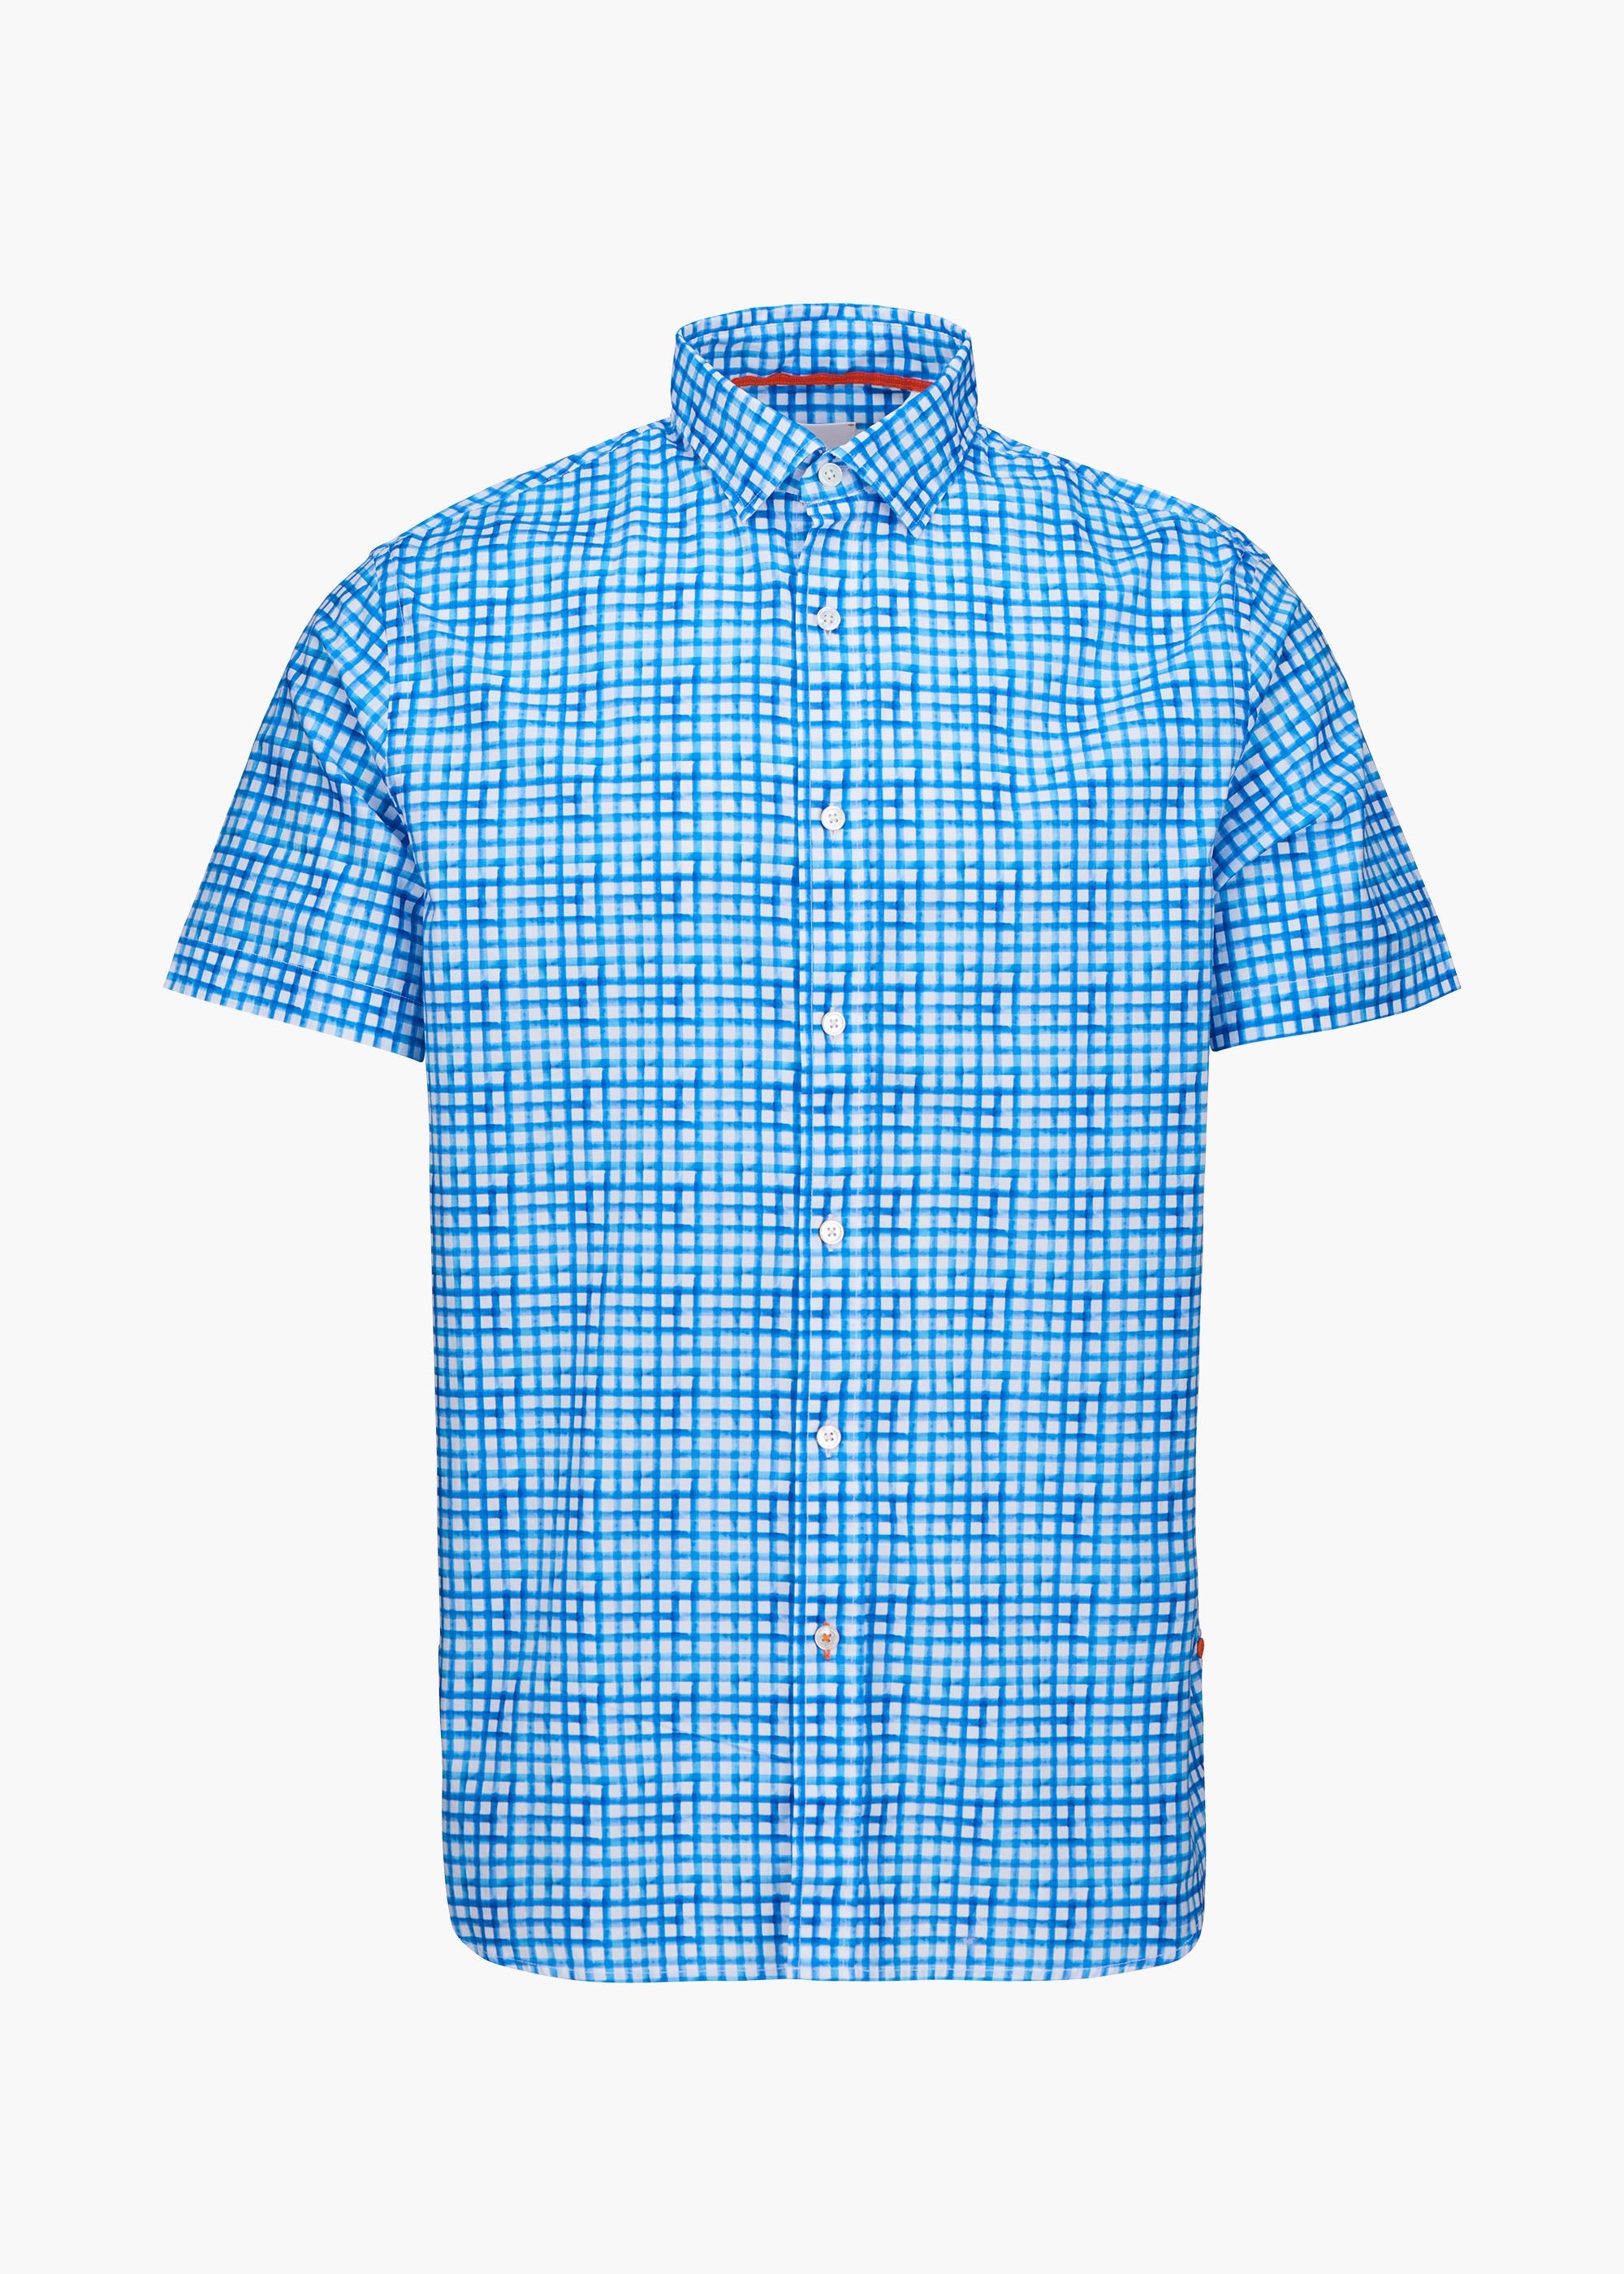 Barrano Woven Shirt - background::white,variant::Blue Skies